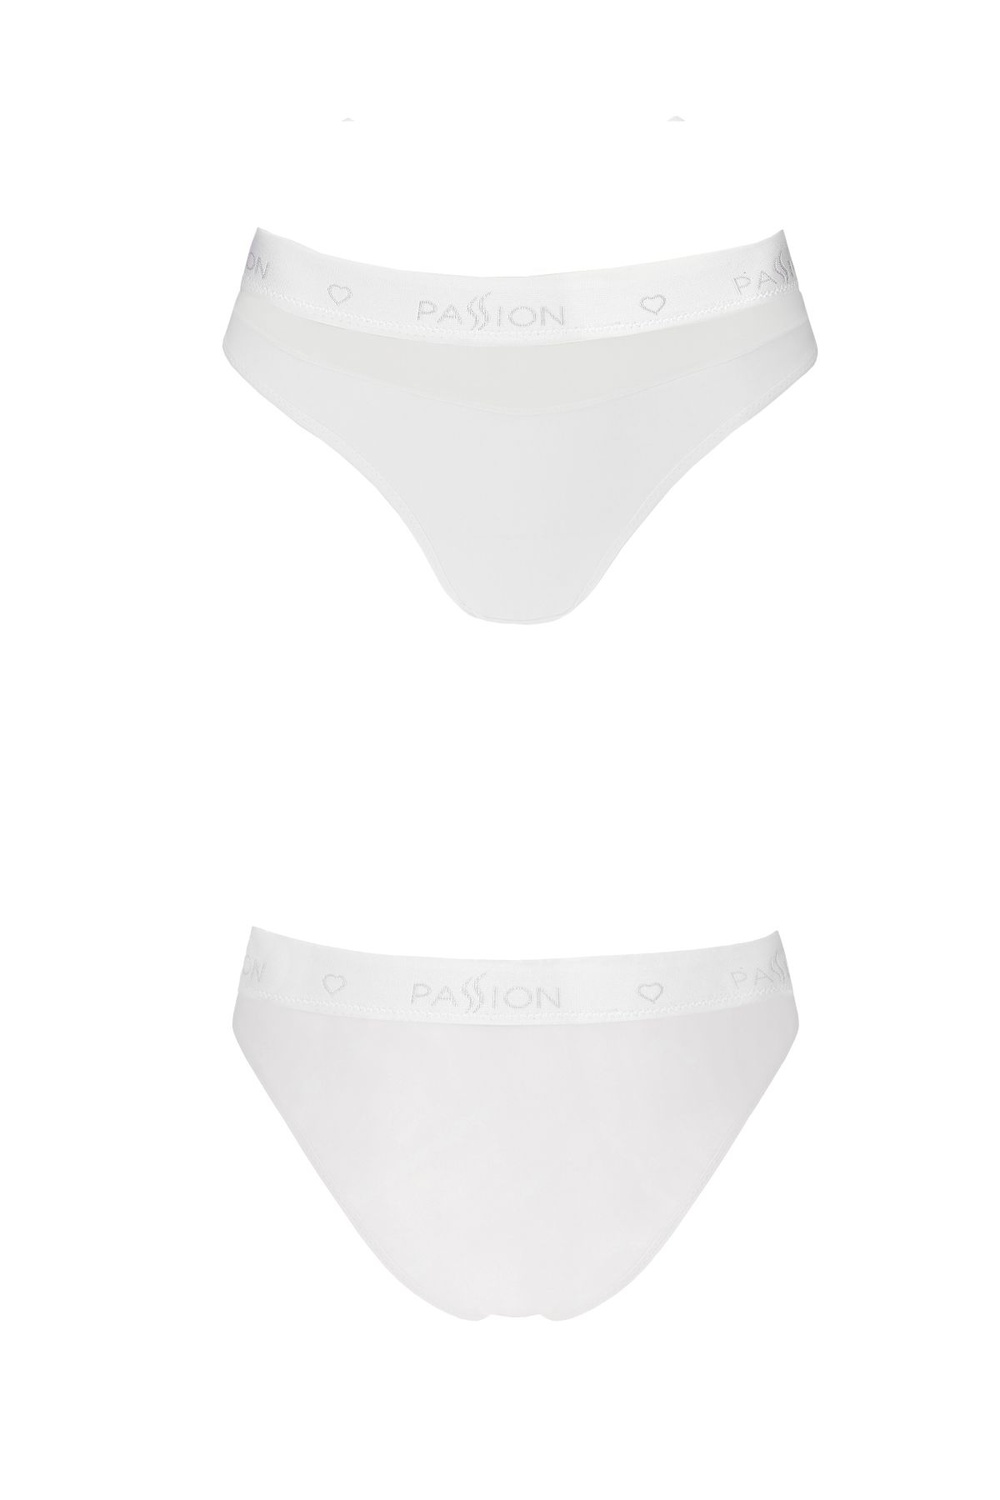 Трусики с прозрачной вставкой Passion PS006 PANTIES white, size S фото